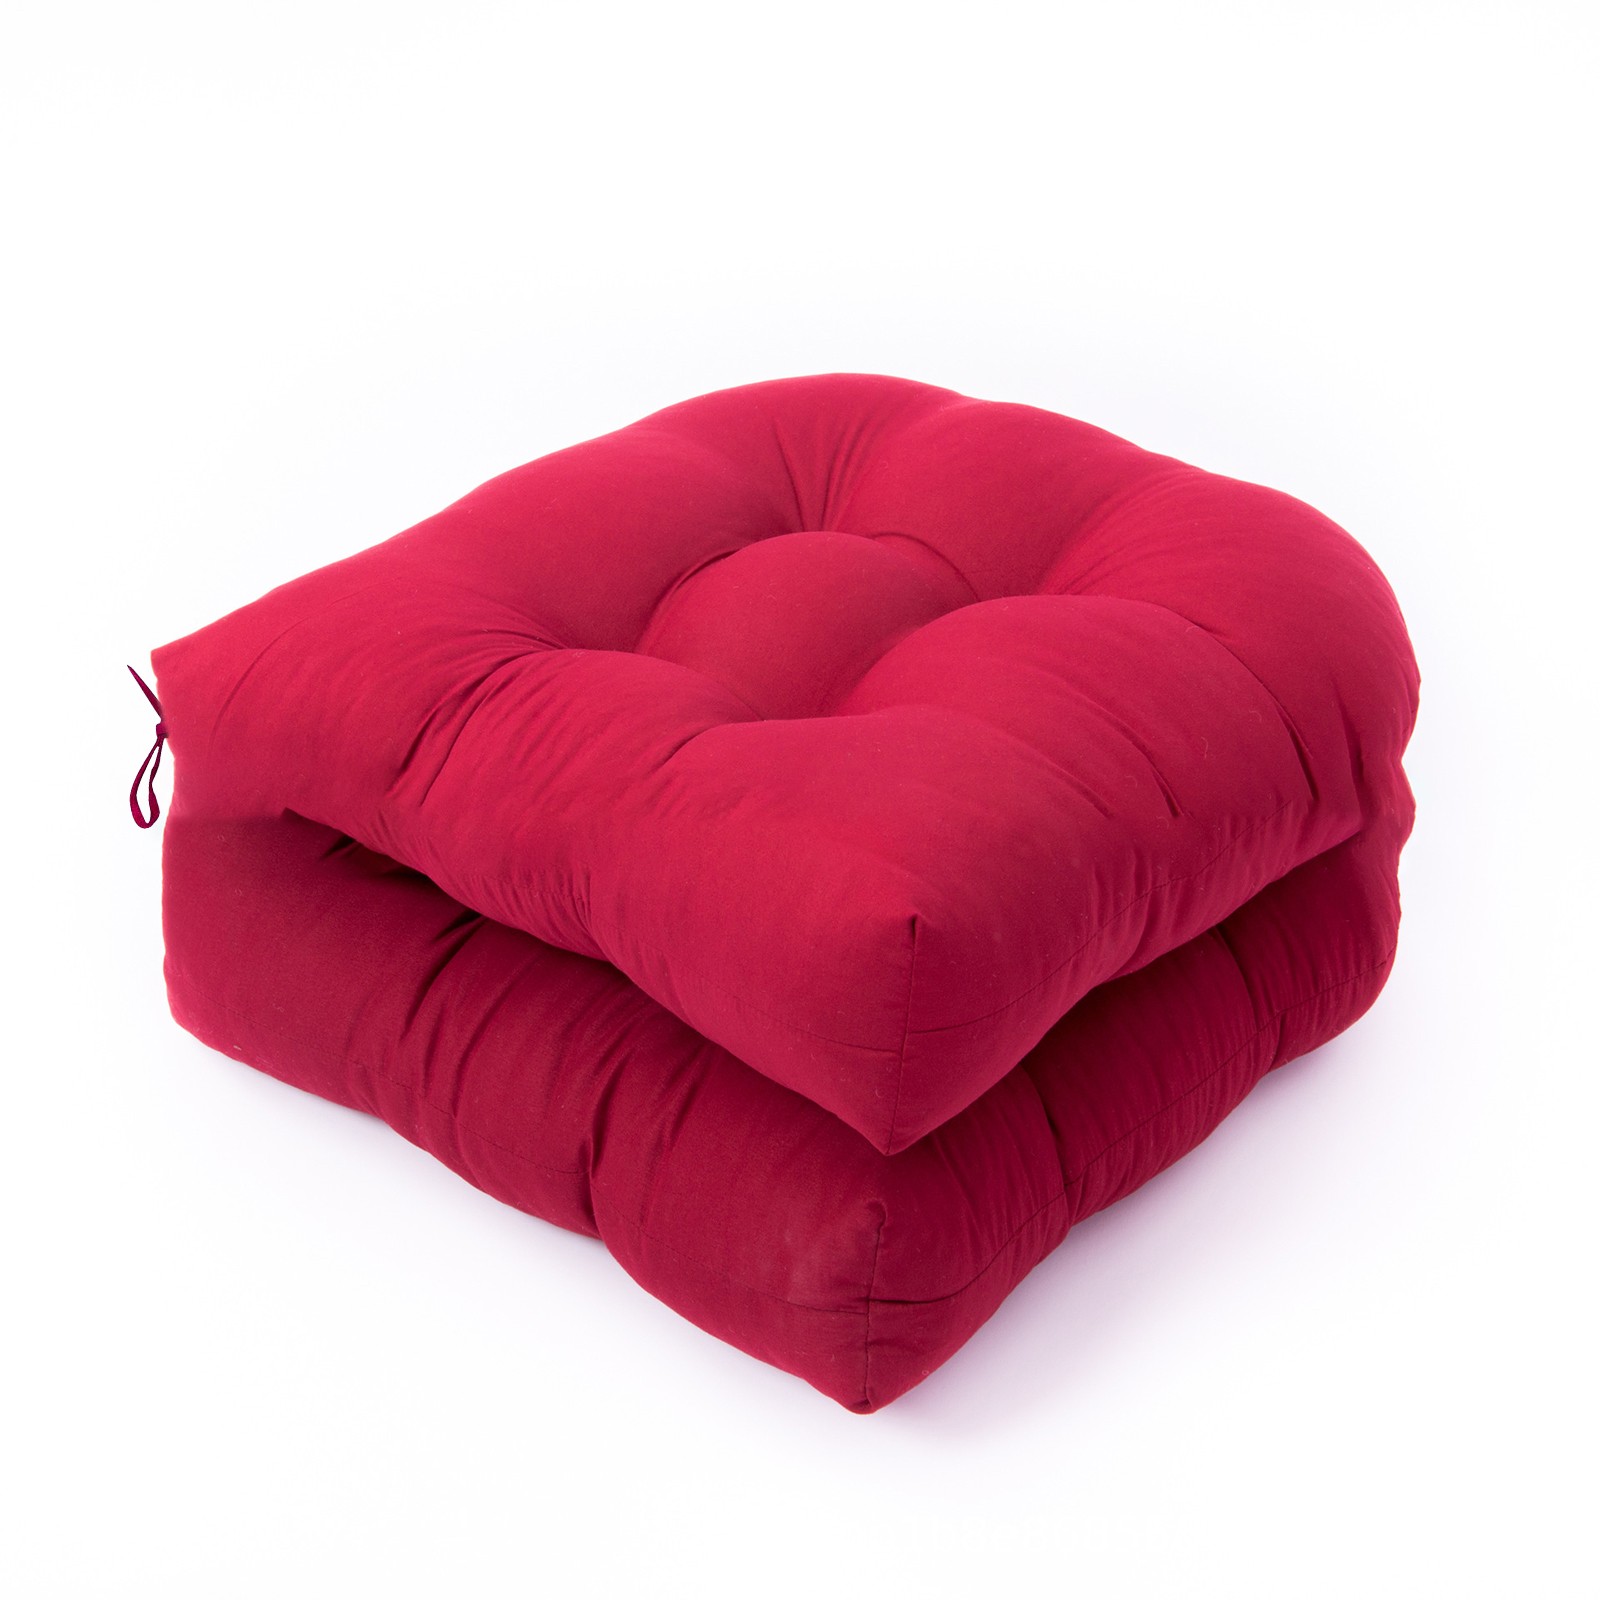 Mduoduo U-shaped Cushion Sofa Cushion Rattan Chair Red Cushion Terrace Cushion for Outdoor Indoor 2 Pcs - image 1 of 14